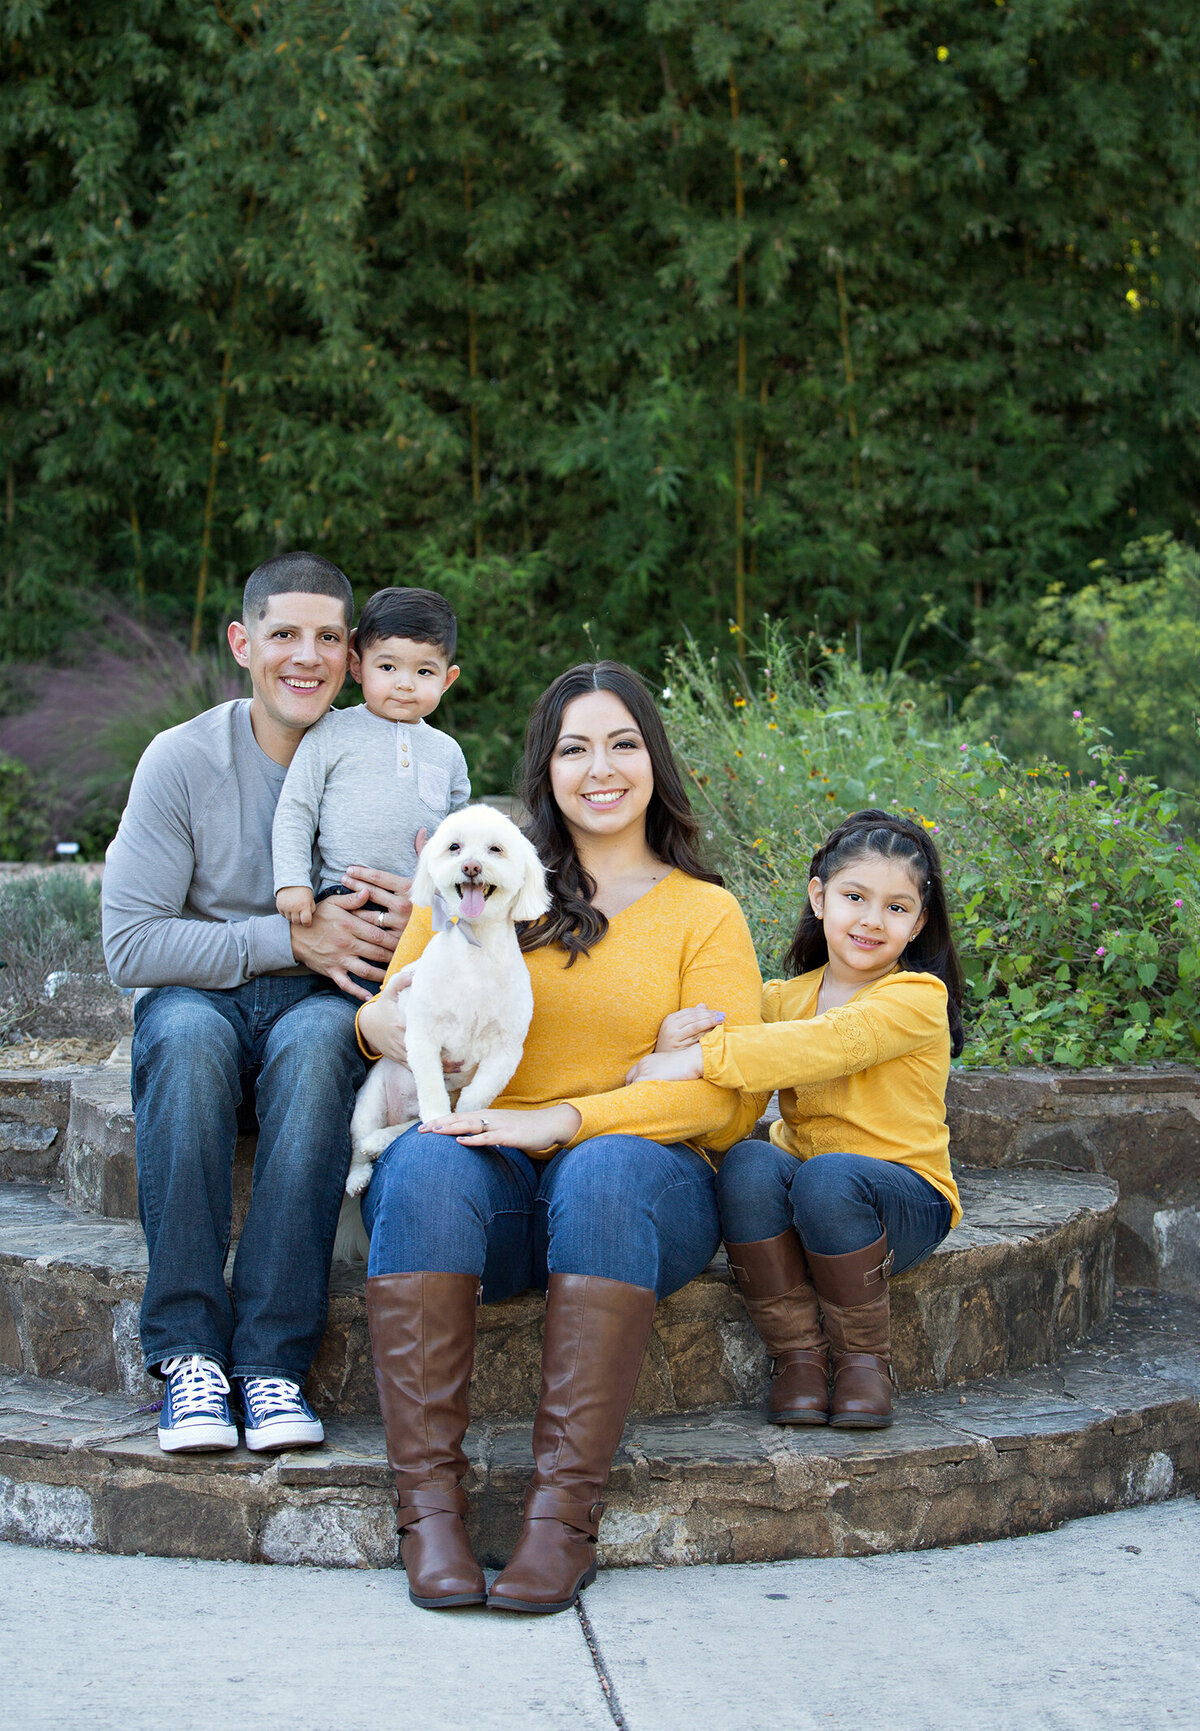 San Antonio children and family photography studio lifestyle kids family photographer luxury photo studio